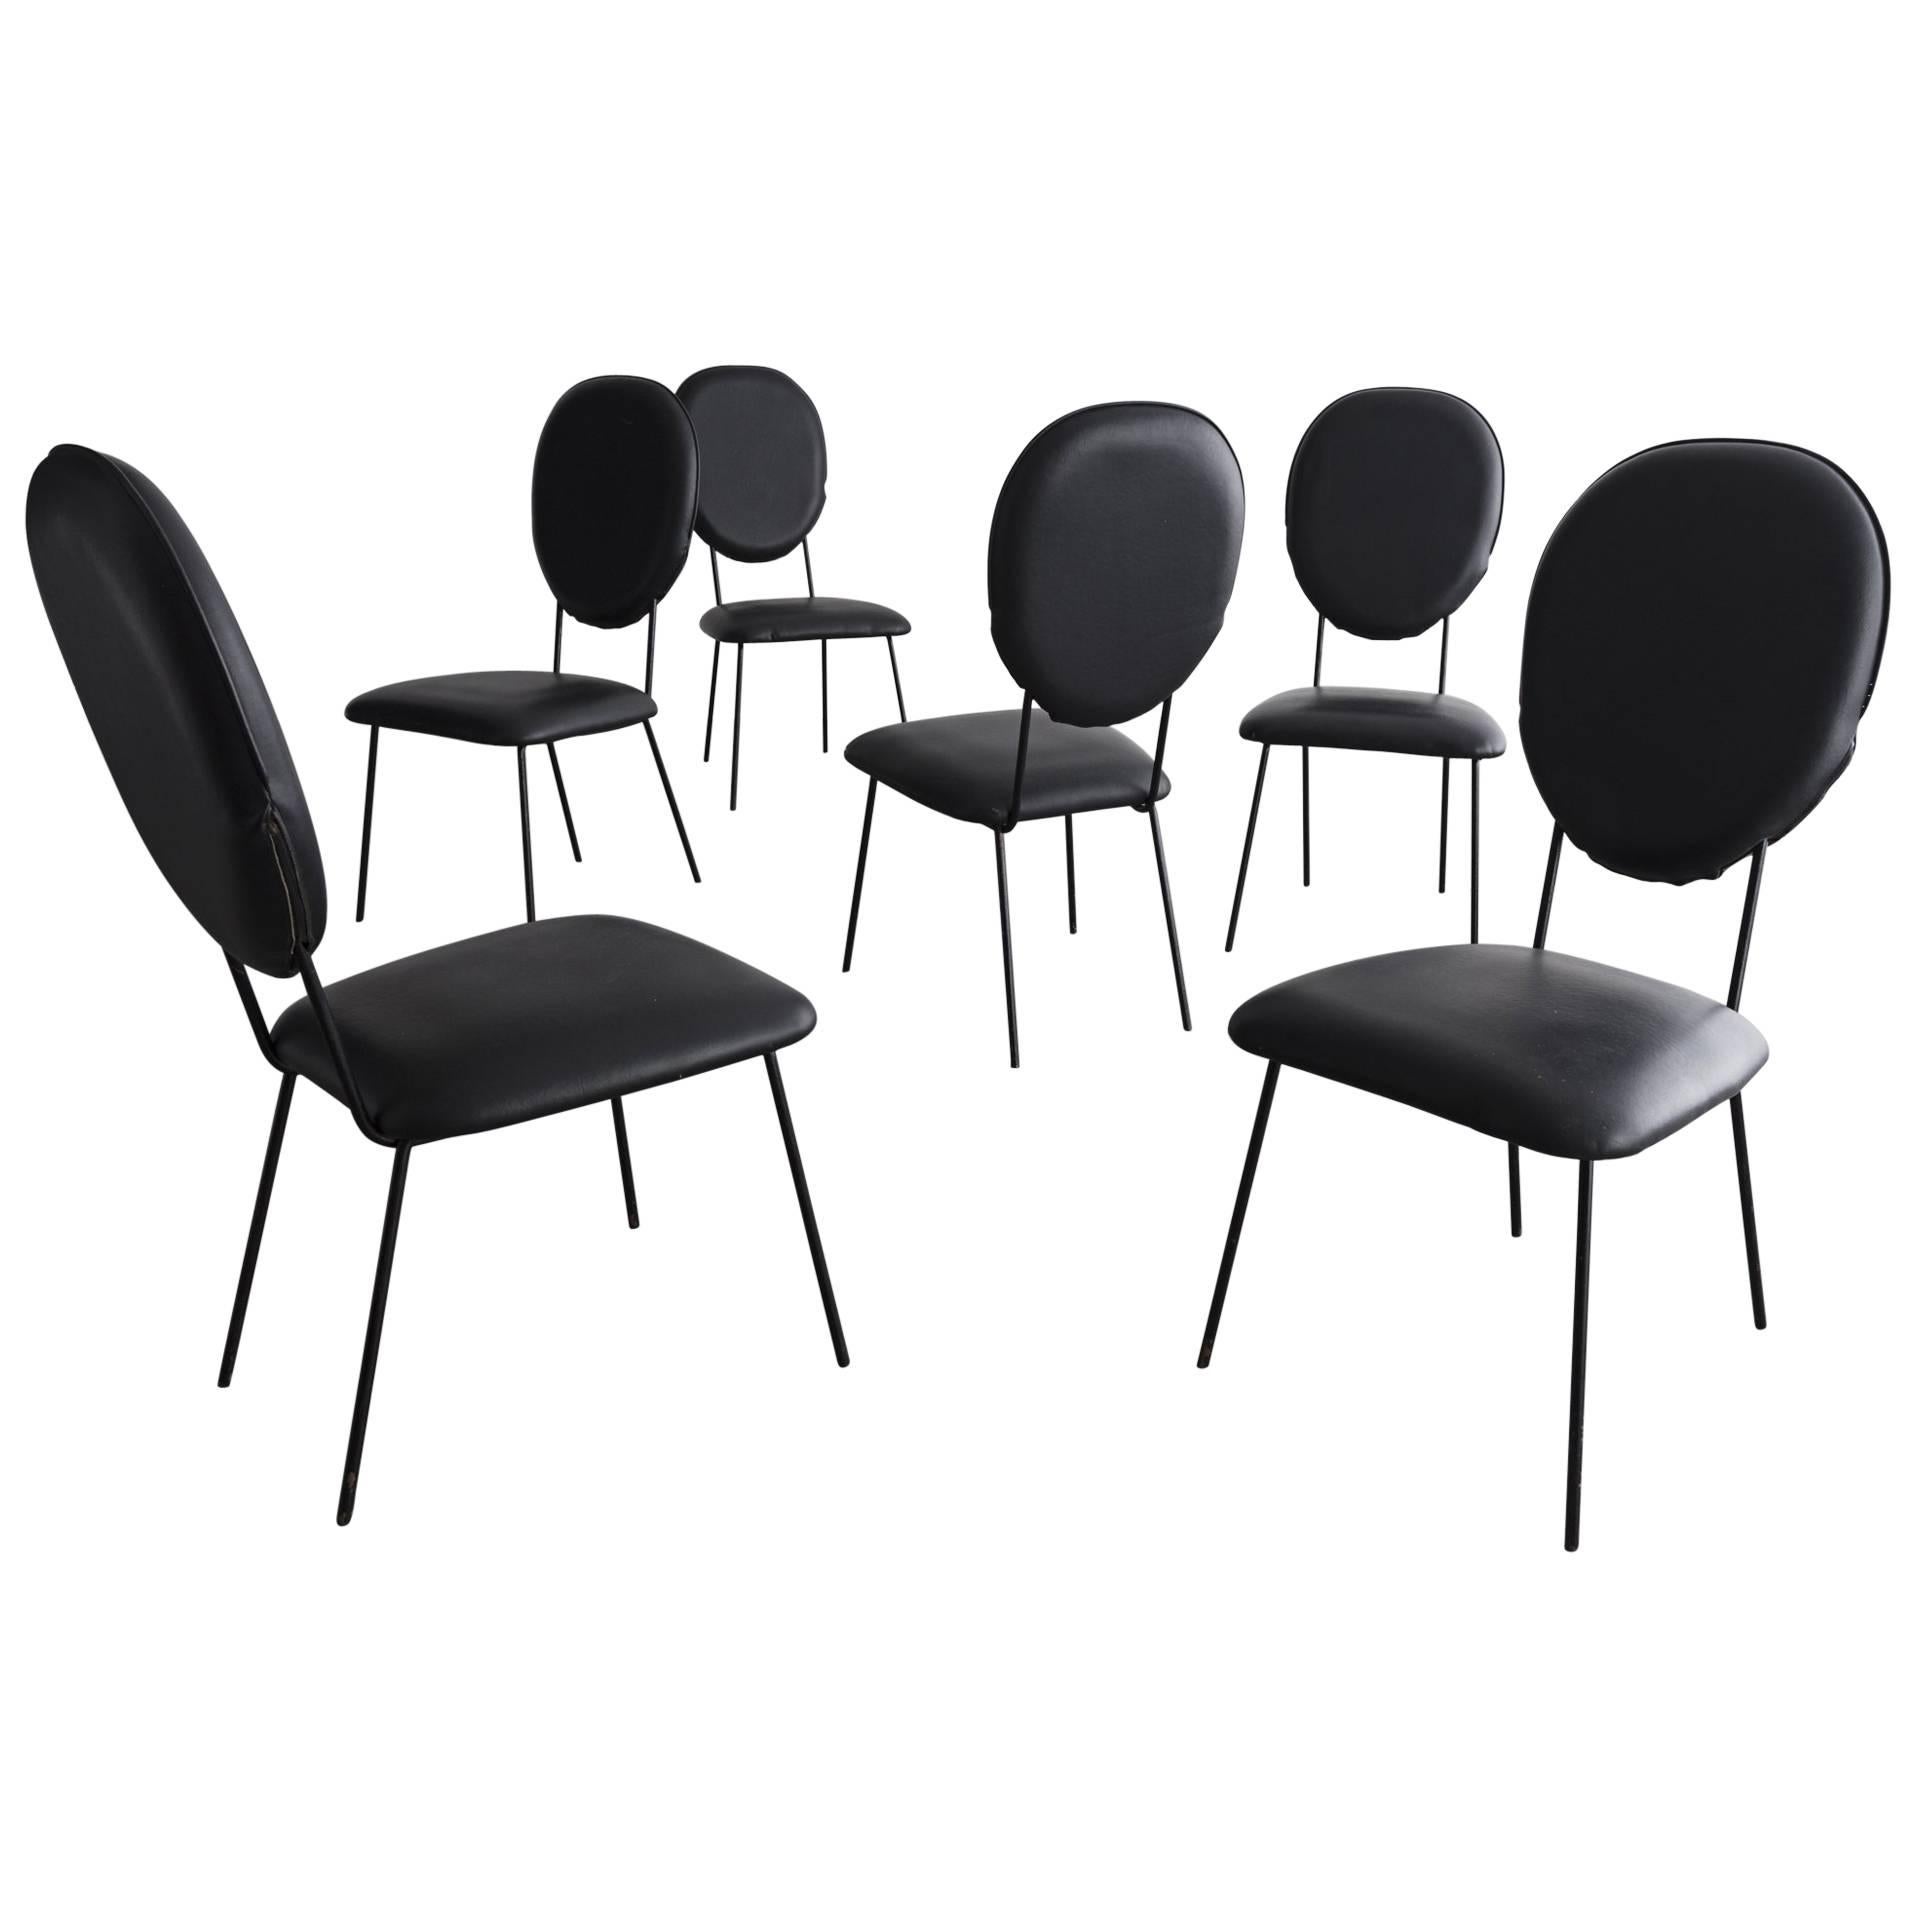 Set of Six Chairs Designed by Joaquim Tenreiro, Brazil, circa 1958